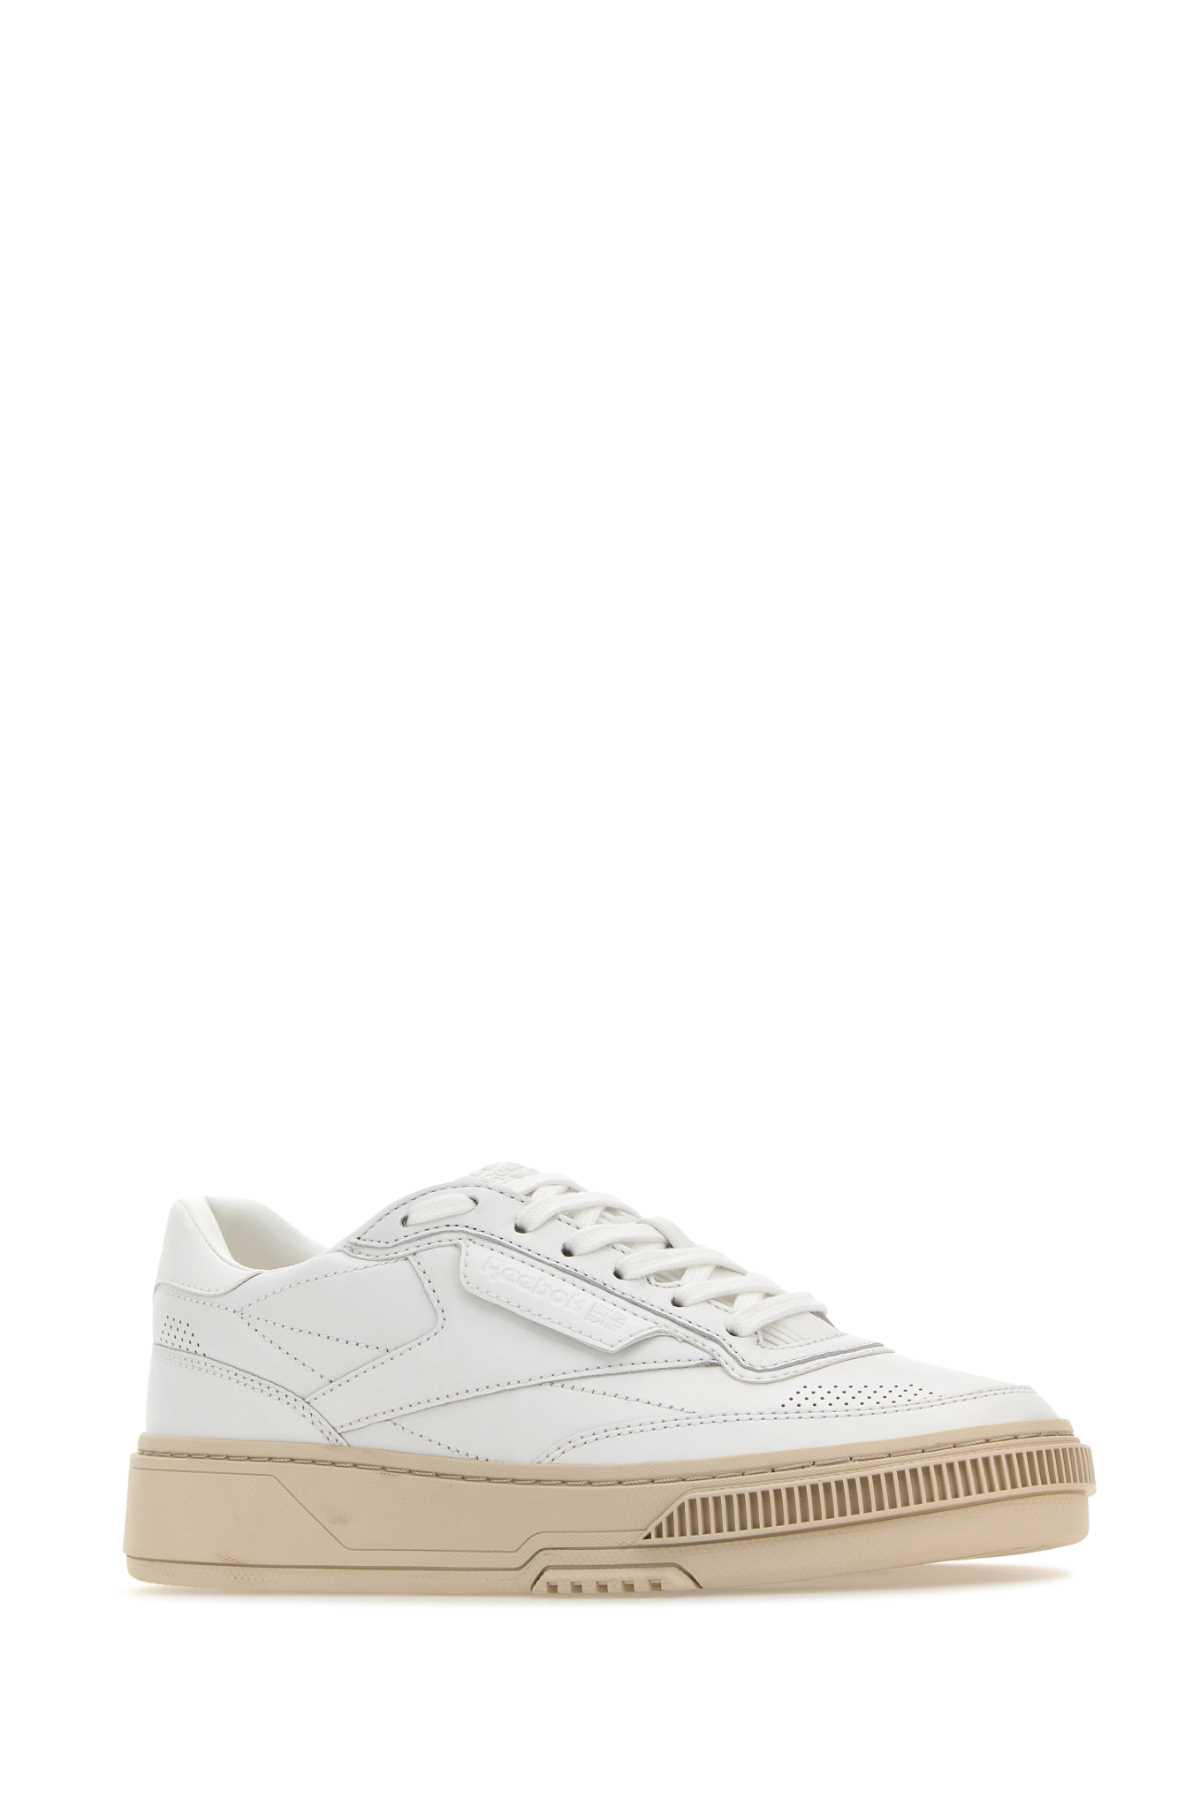 Shop Reebok White Leather Club C Ltd Sneakers